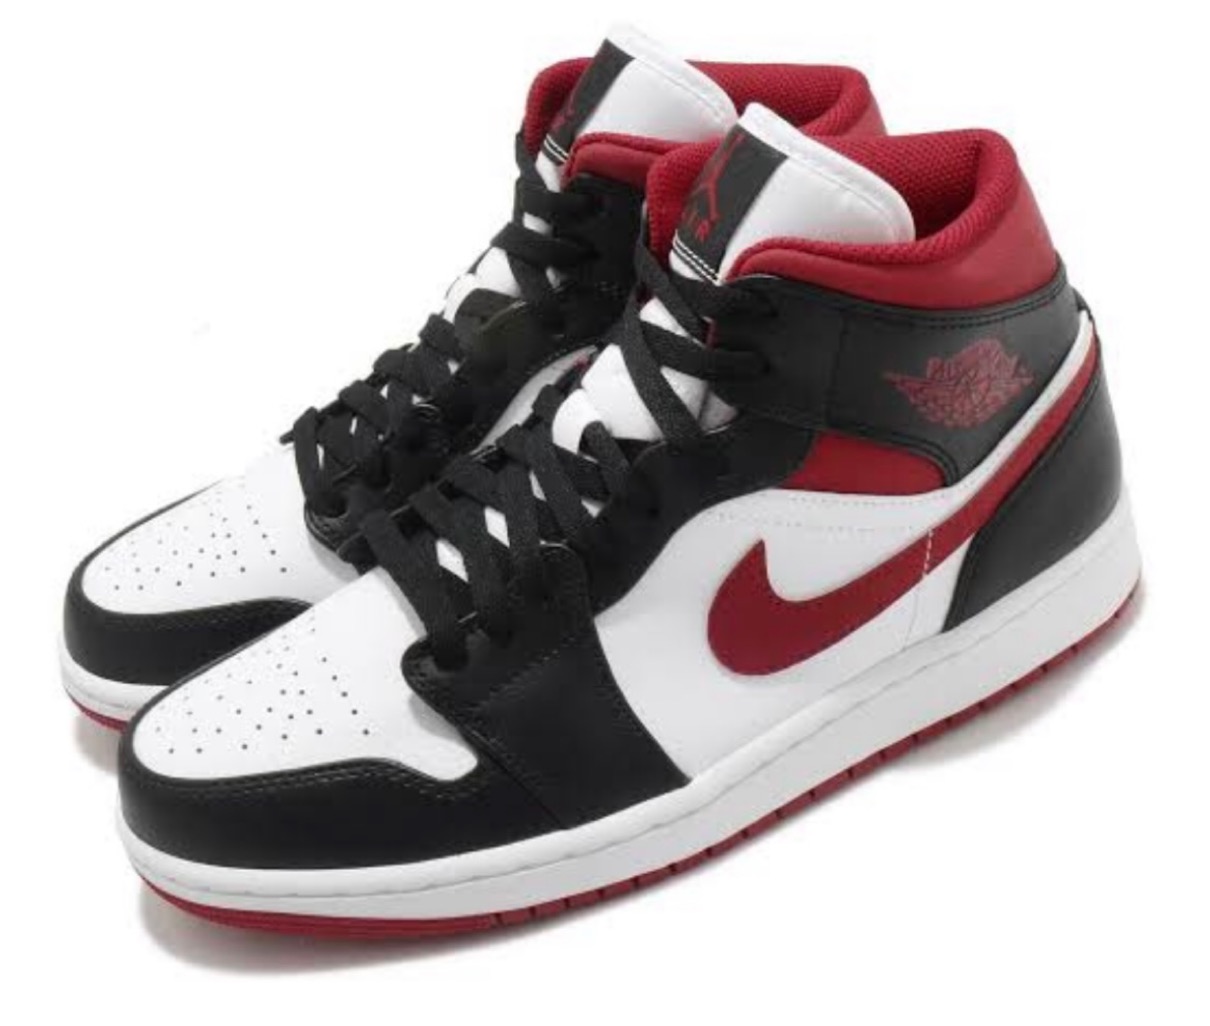 Nike】Air Jordan 1 Mid “Gym Red”が国内4月16日に発売予定 | UP TO DATE